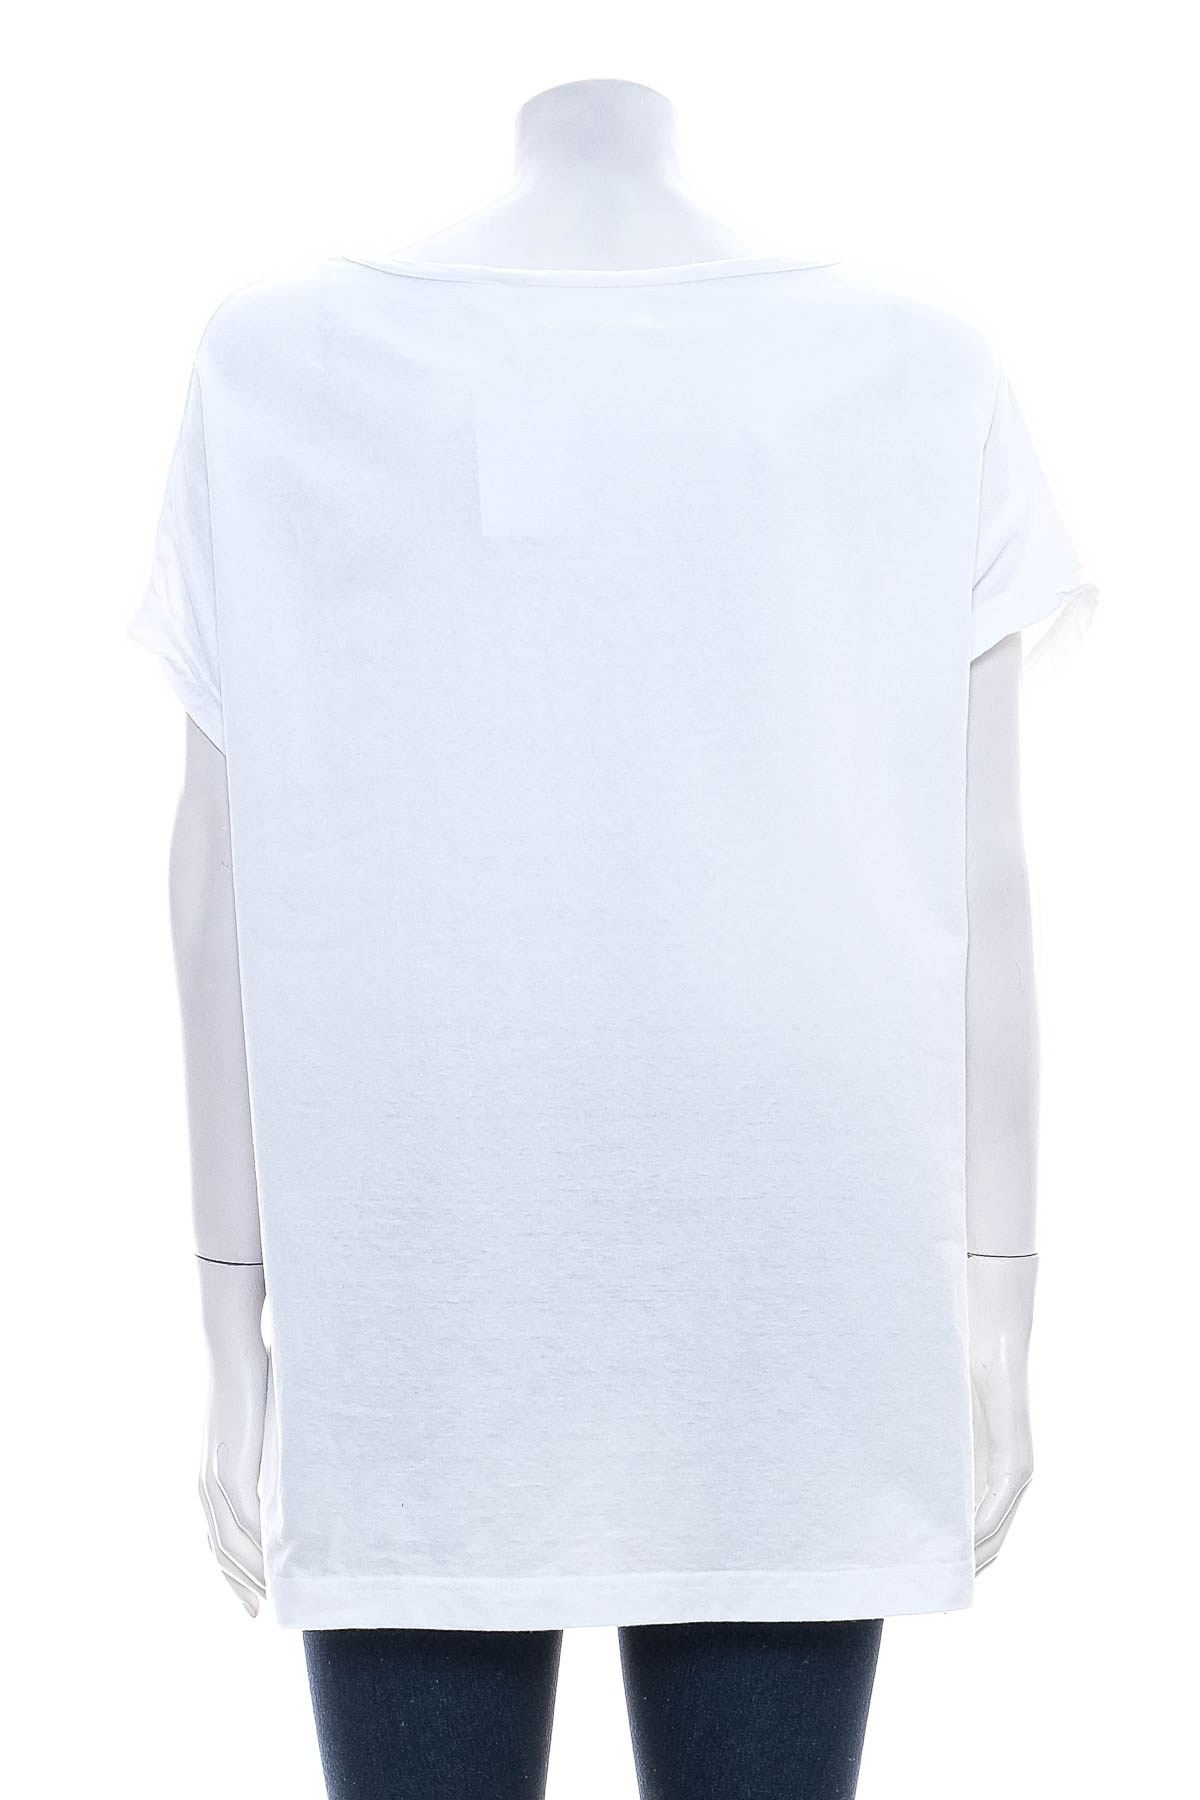 Women's t-shirt - Bpc selection bonprix collection - 1